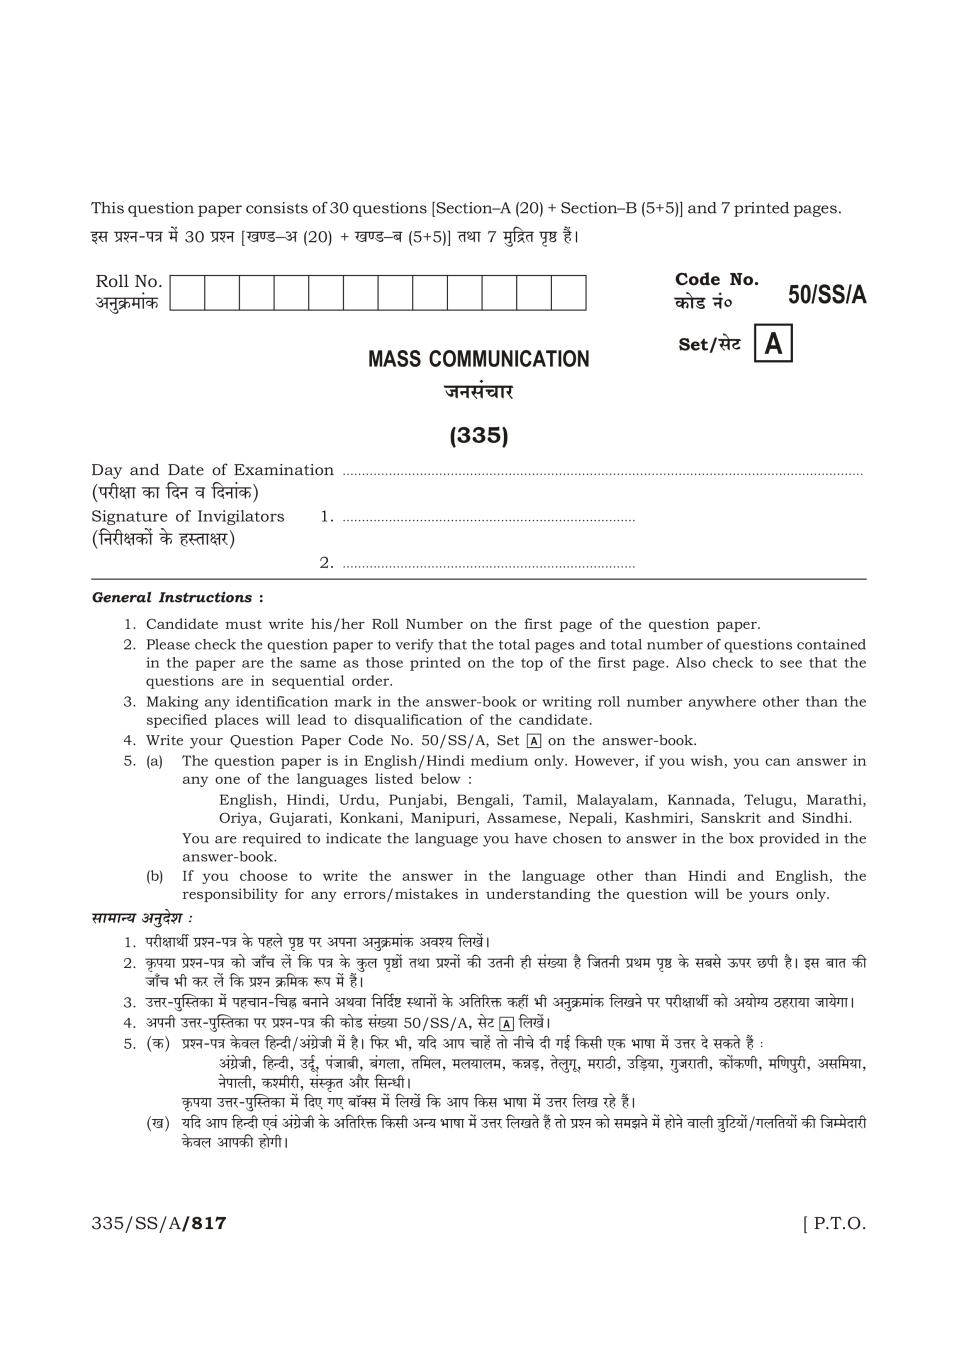 NIOS Class 12 Question Paper Apr 2015 - Mass Communication - Page 1